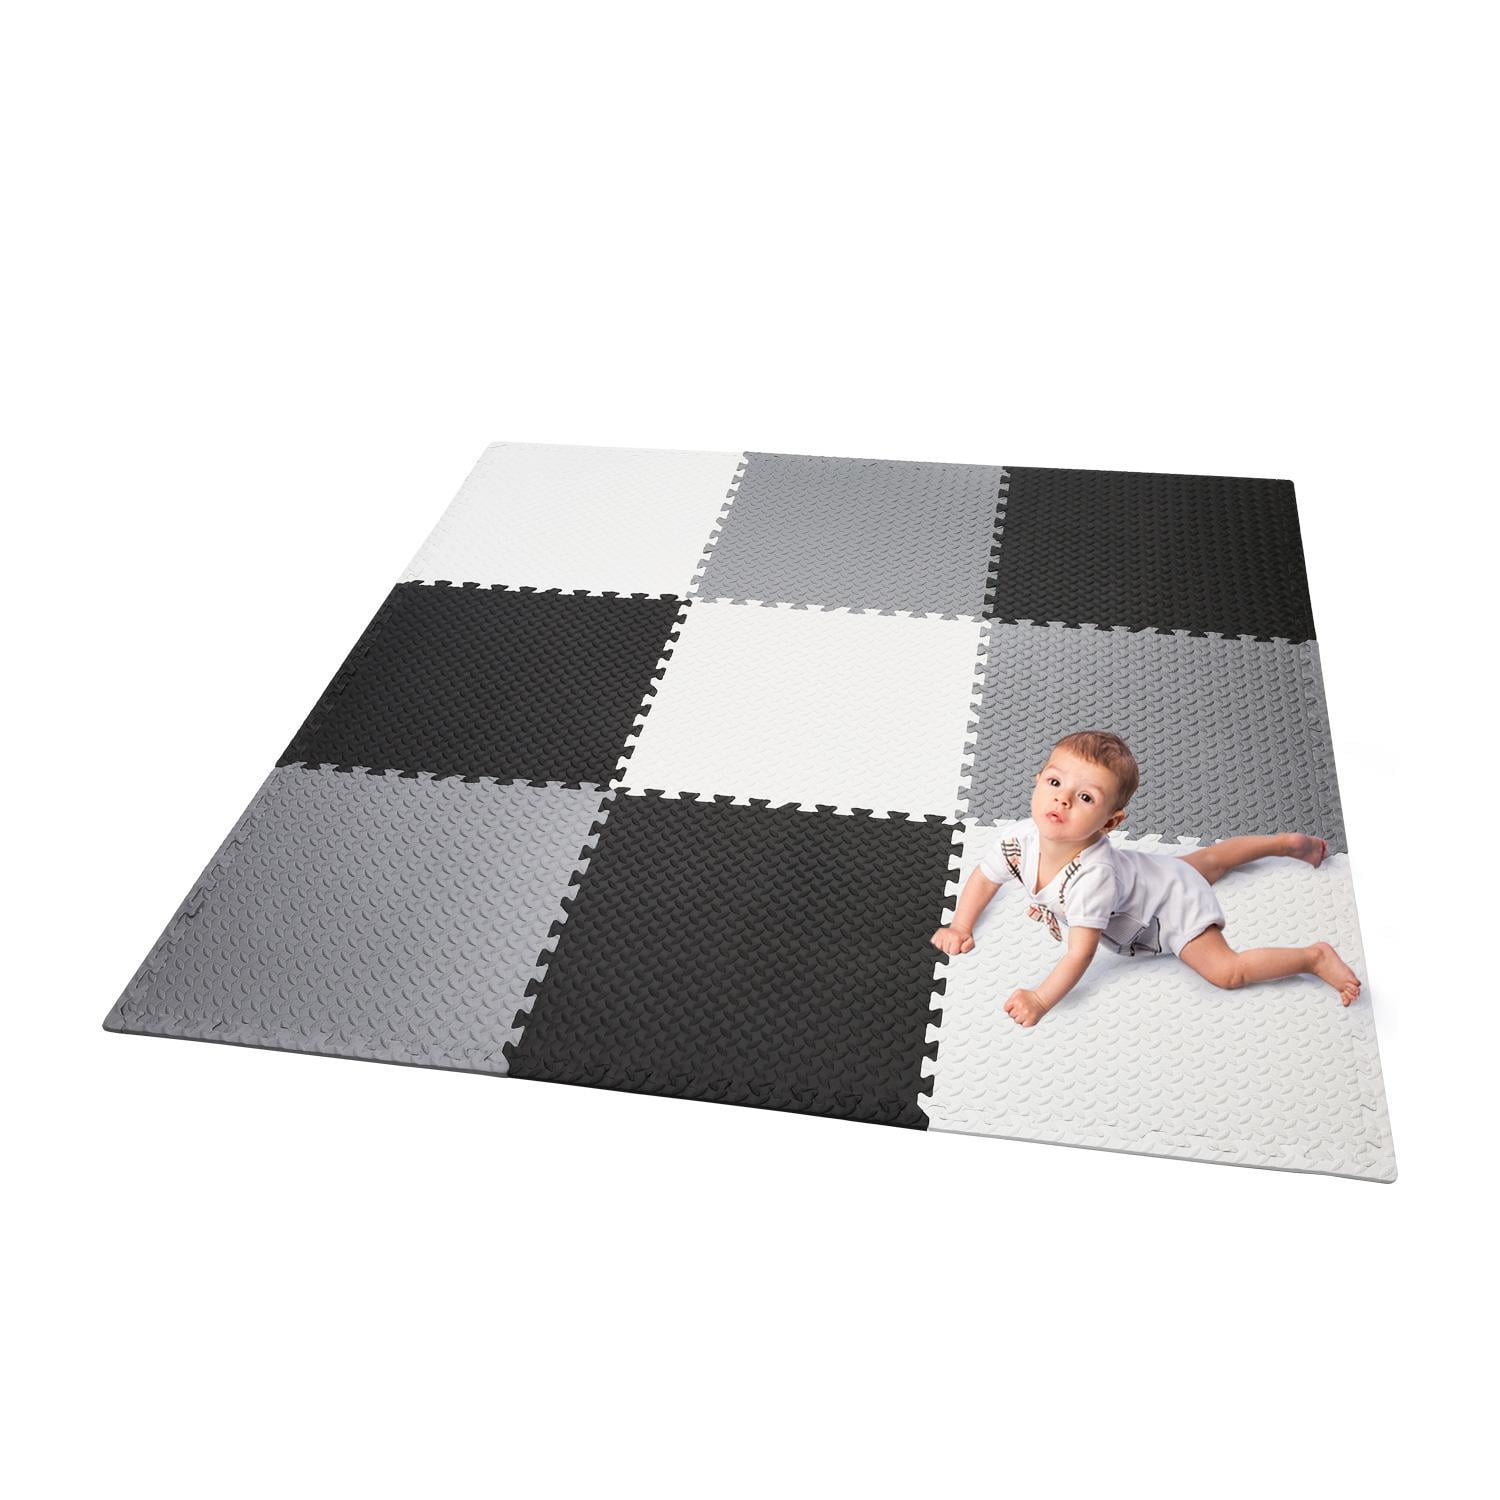 big foam floor mats